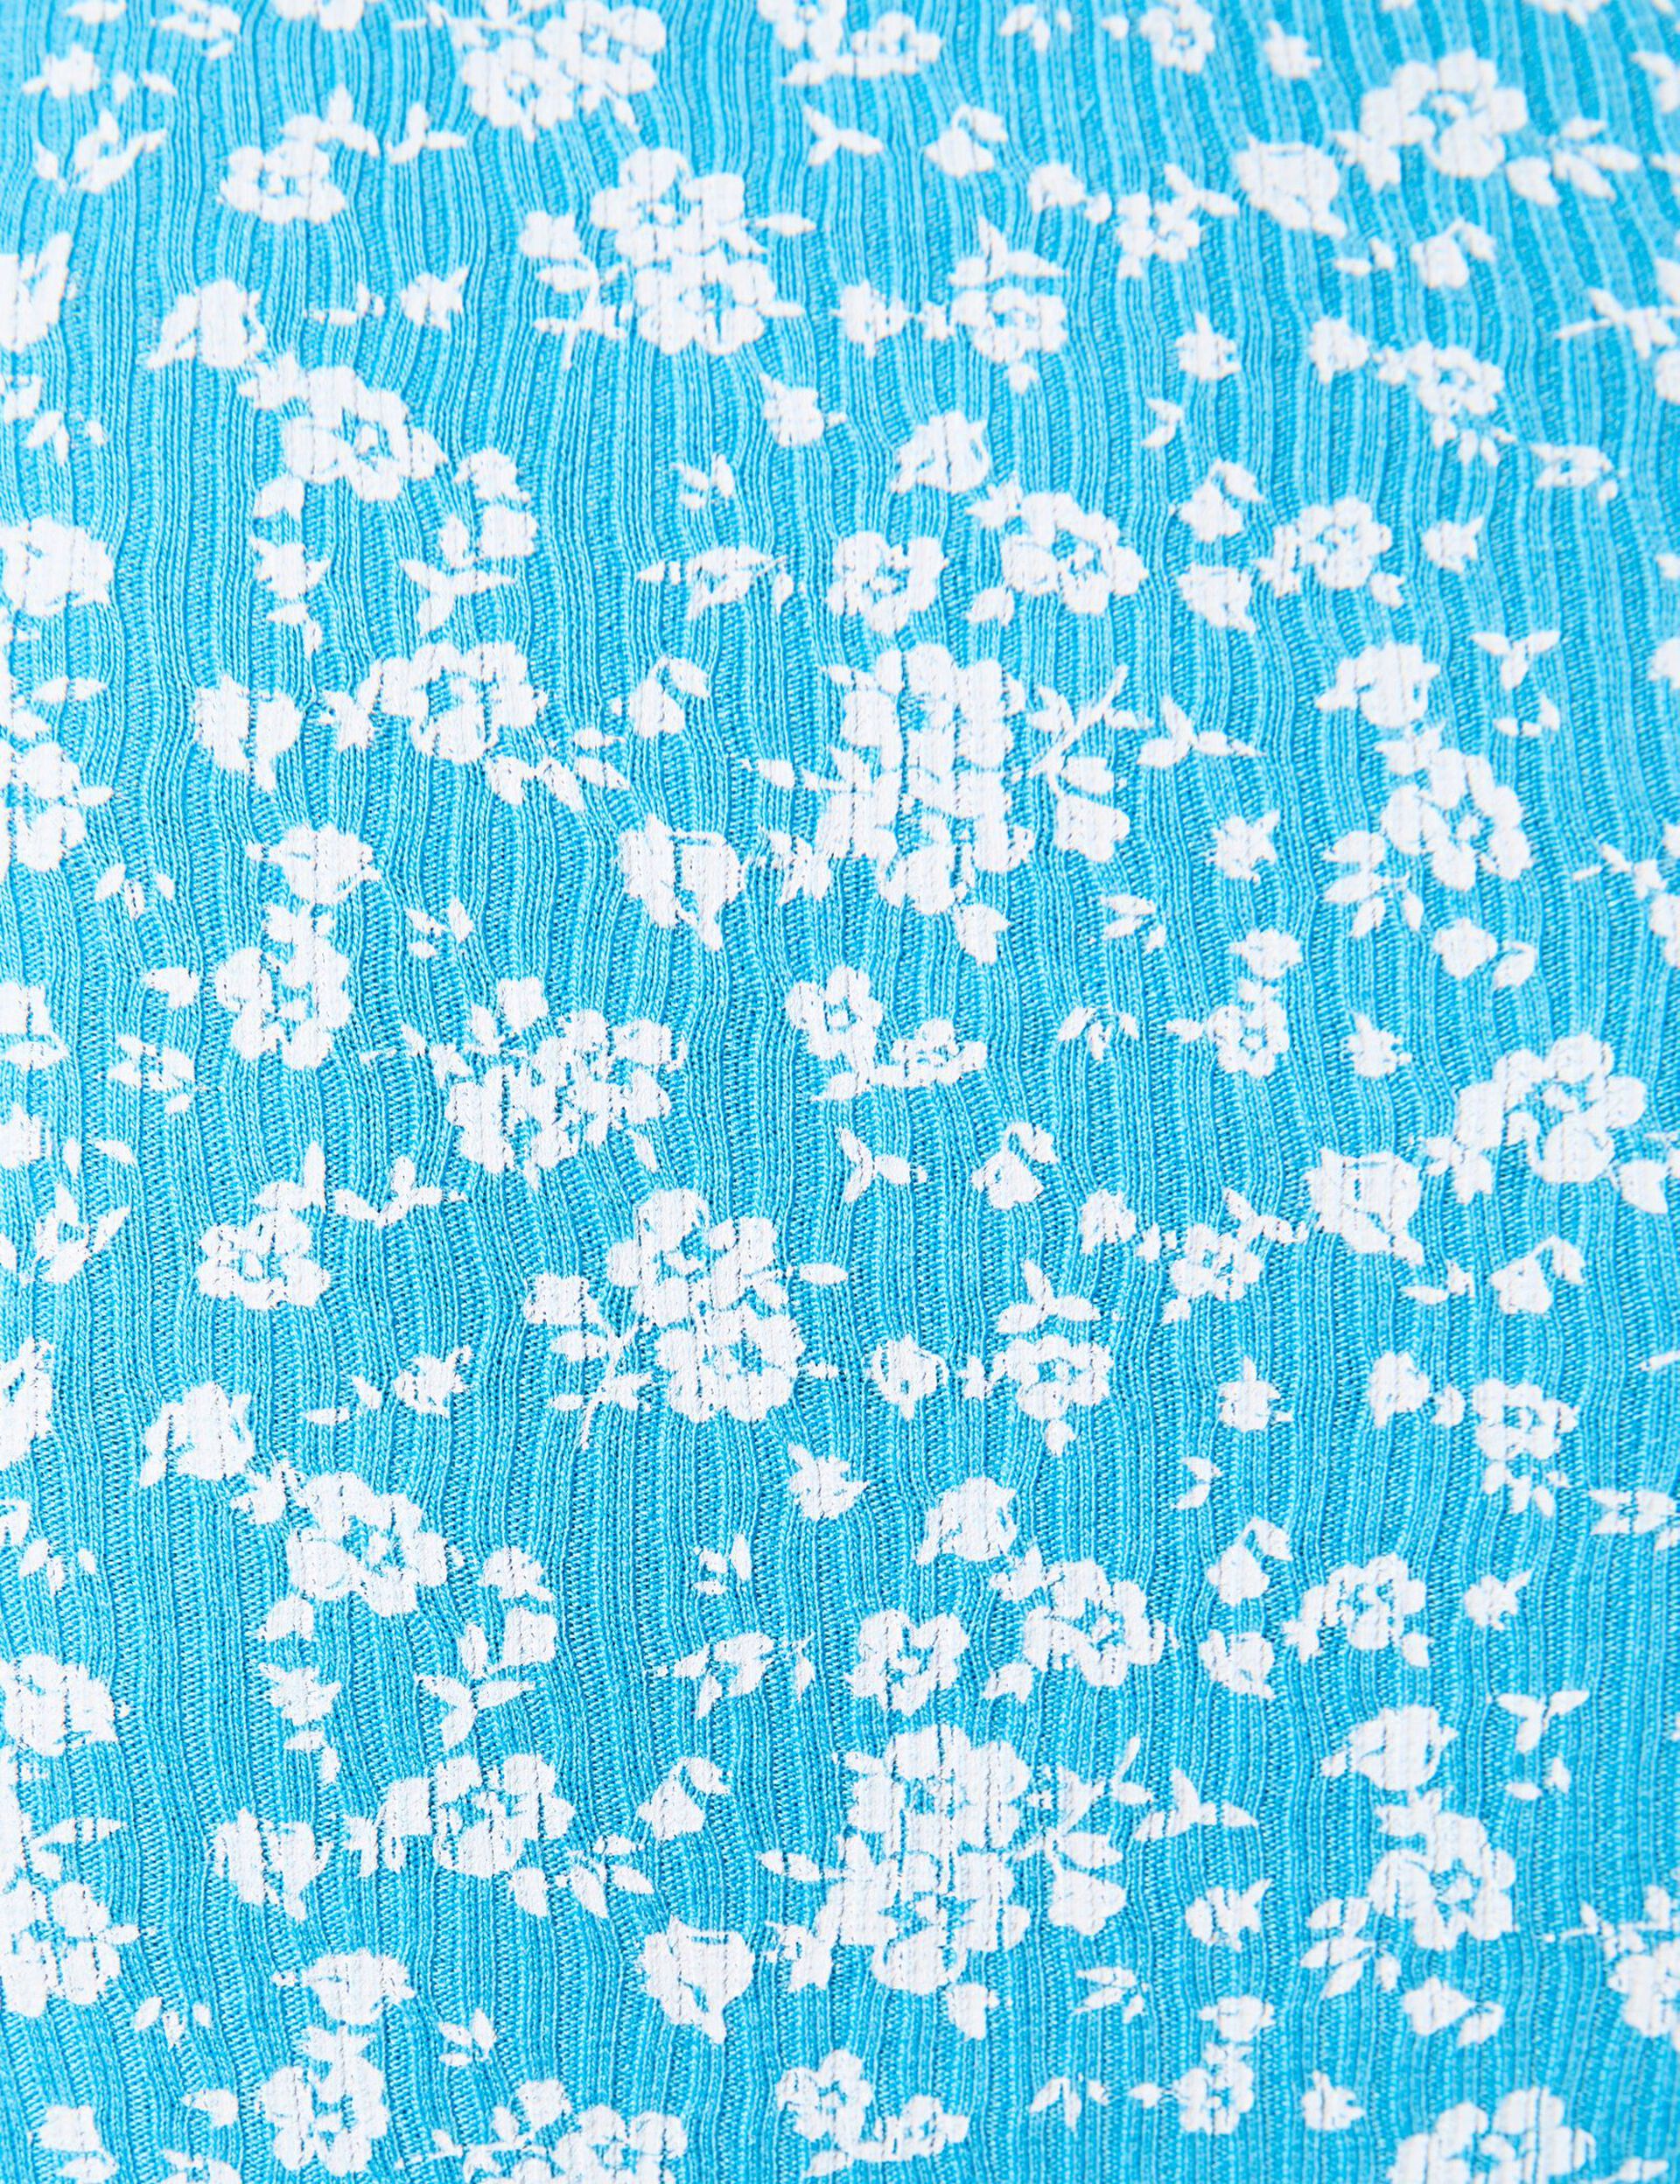 Tee-shirt court fleuri avec fronce manches courtes bleu clair